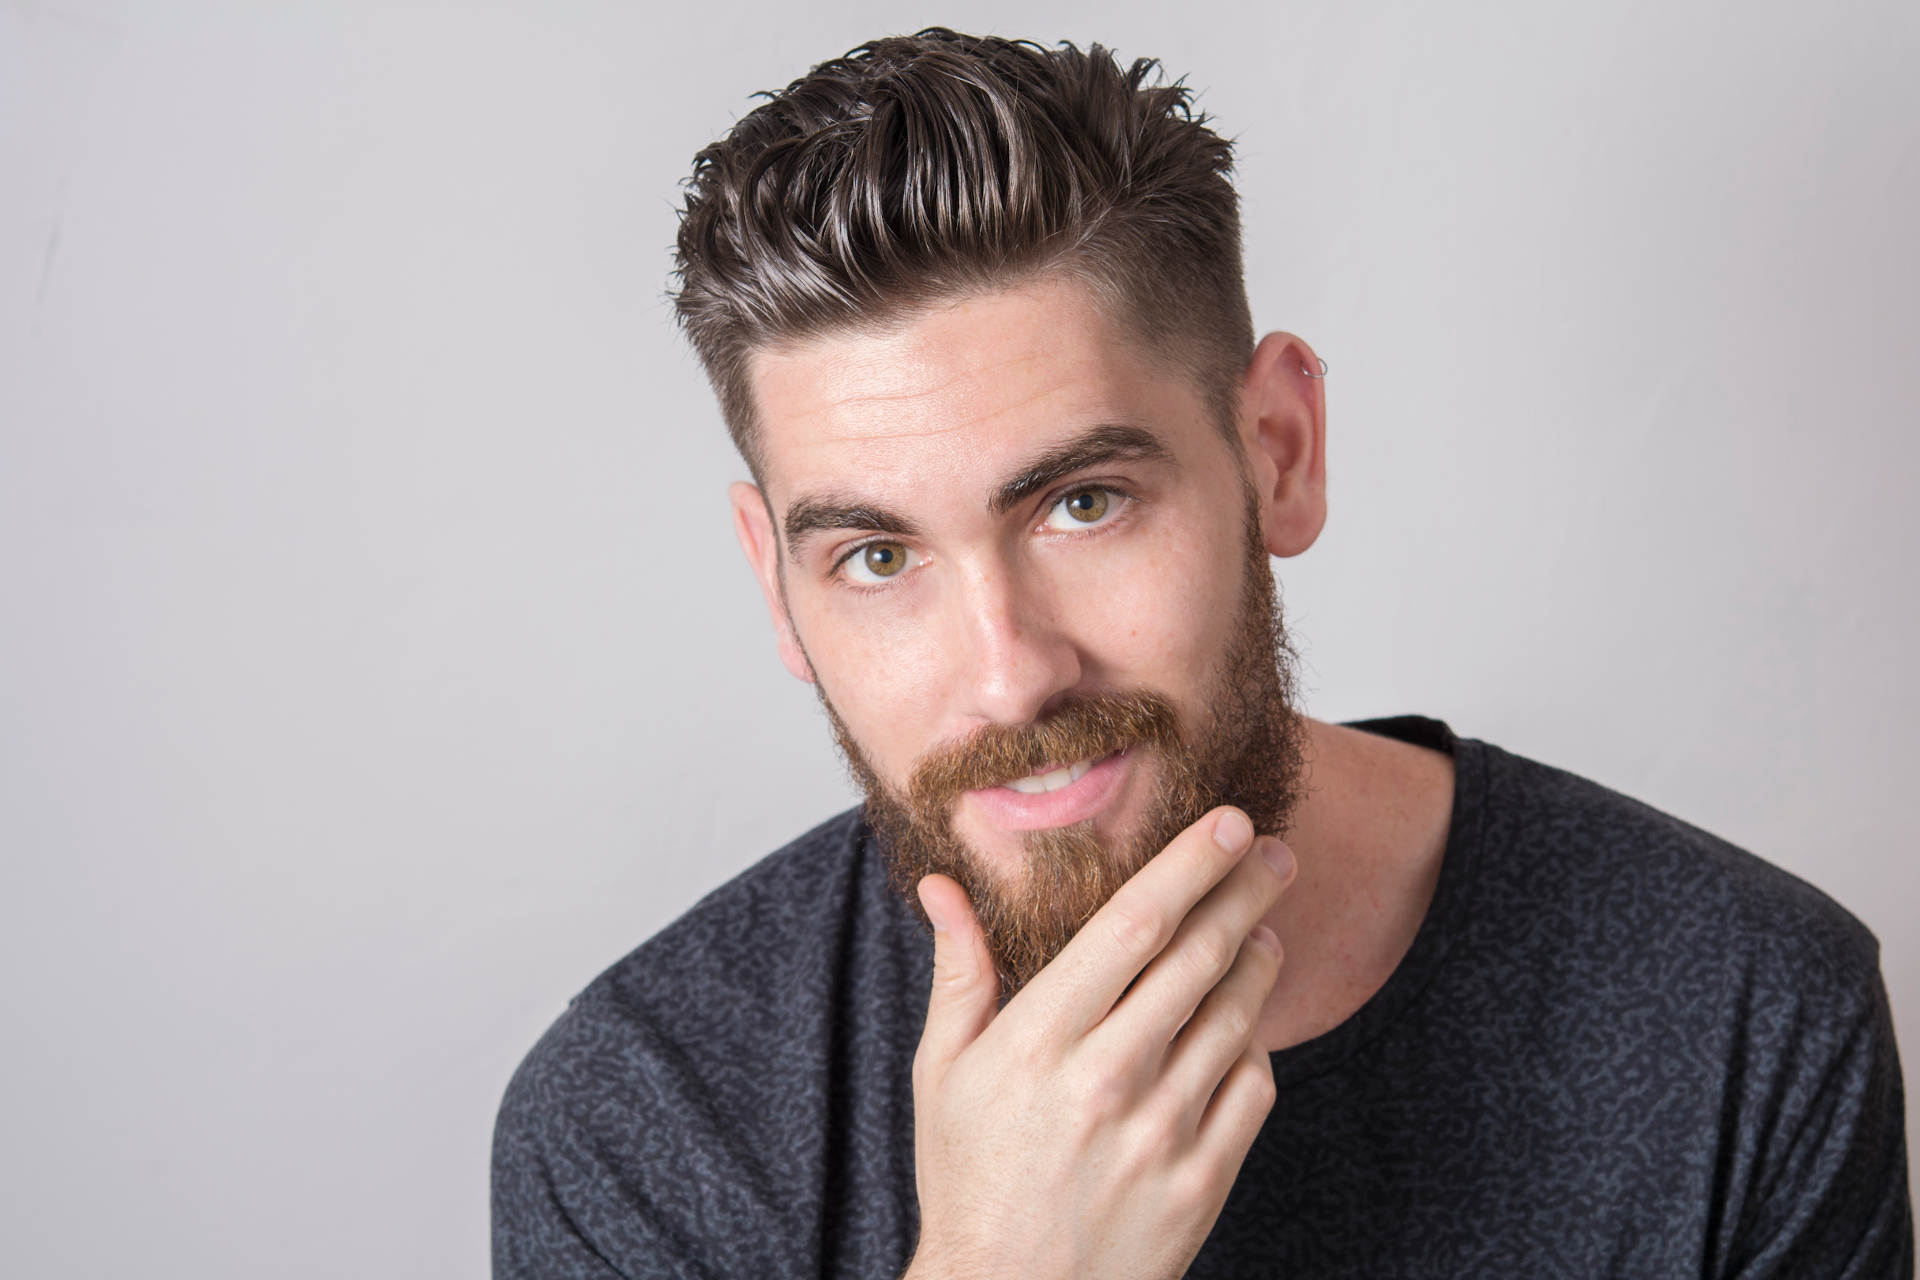 How to Grow a Beard - A Beginners Guide to Grow a Beard